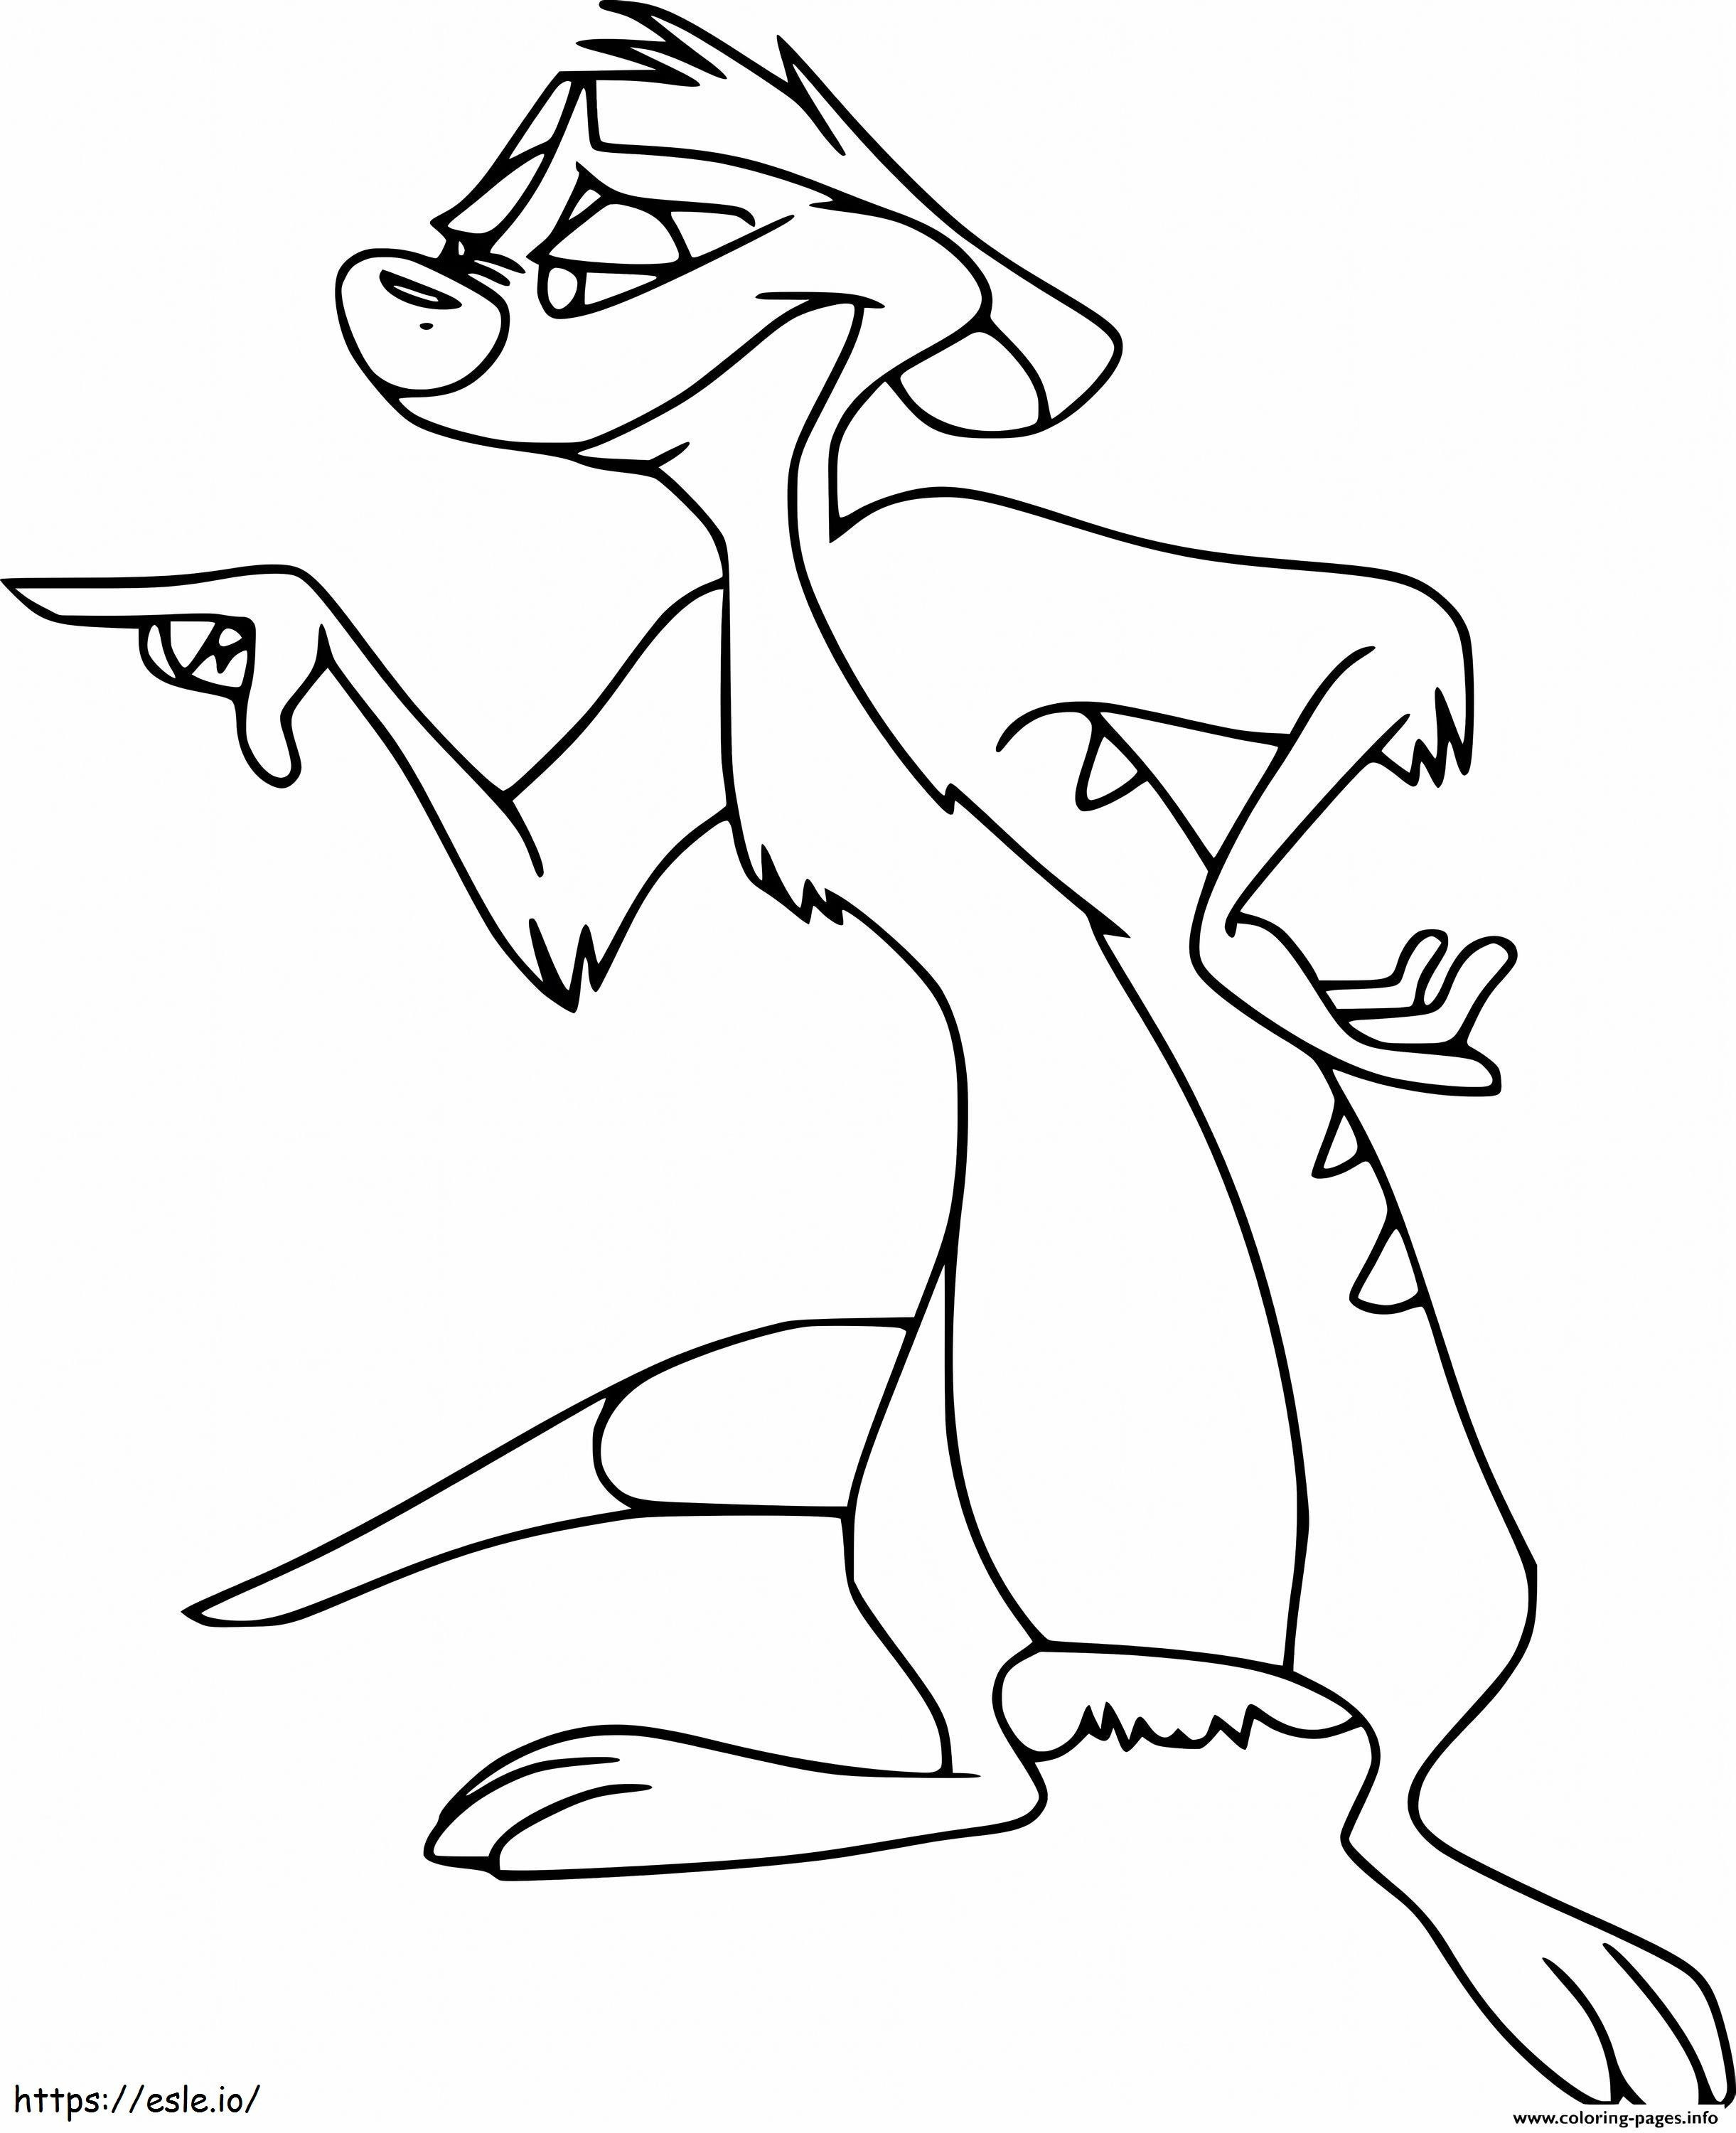 Meerkat Hyperactive Rudder coloring page